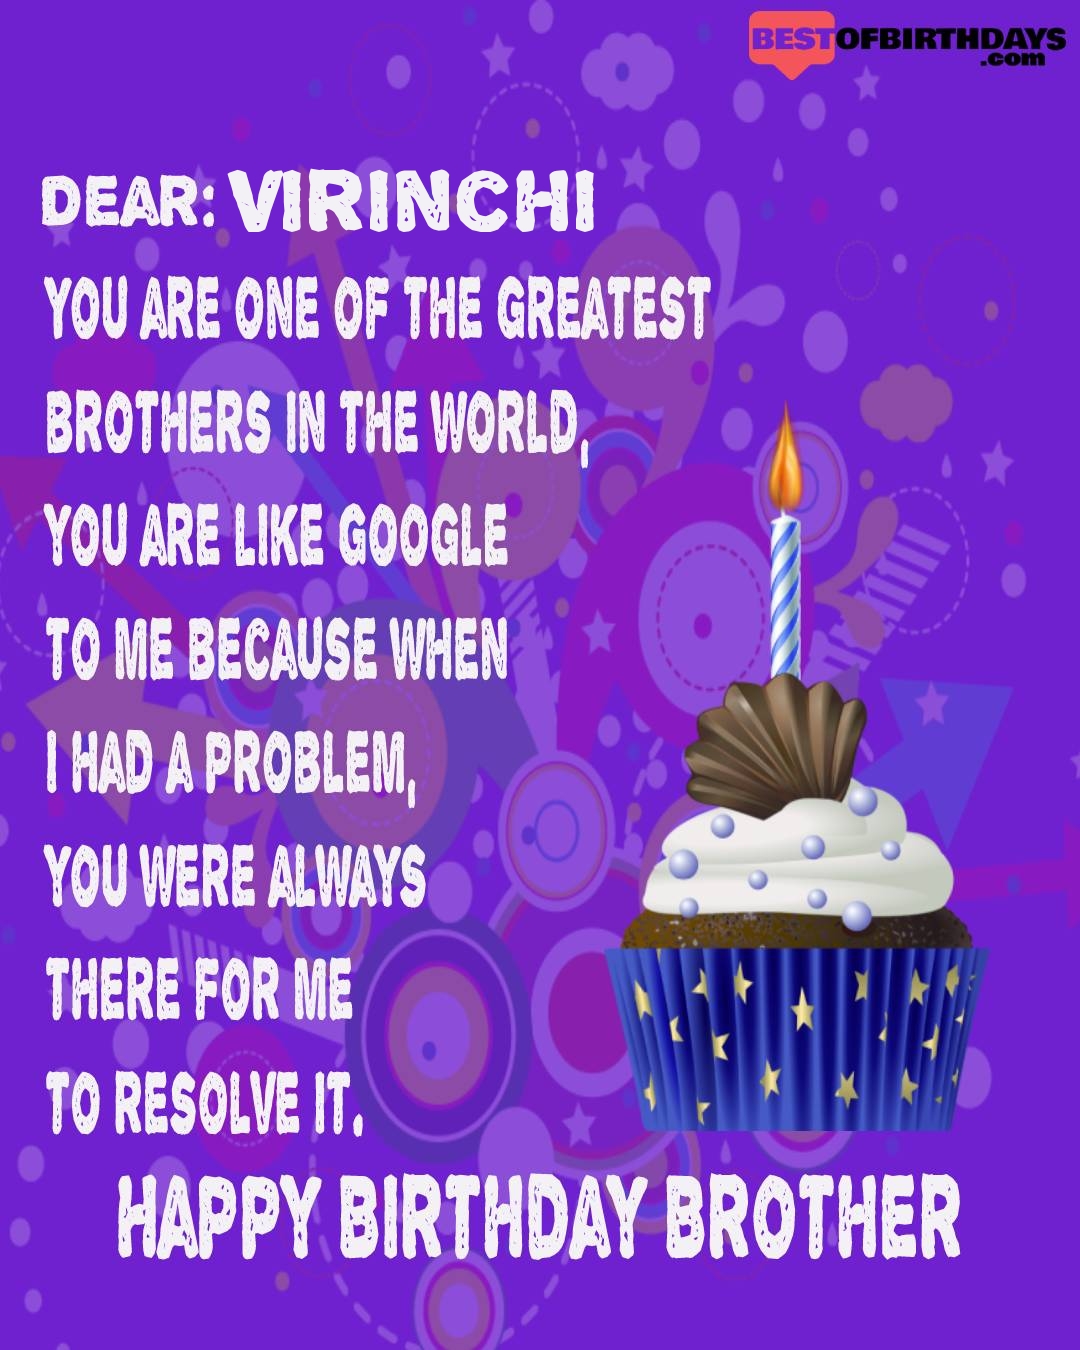 Happy birthday virinchi bhai brother bro